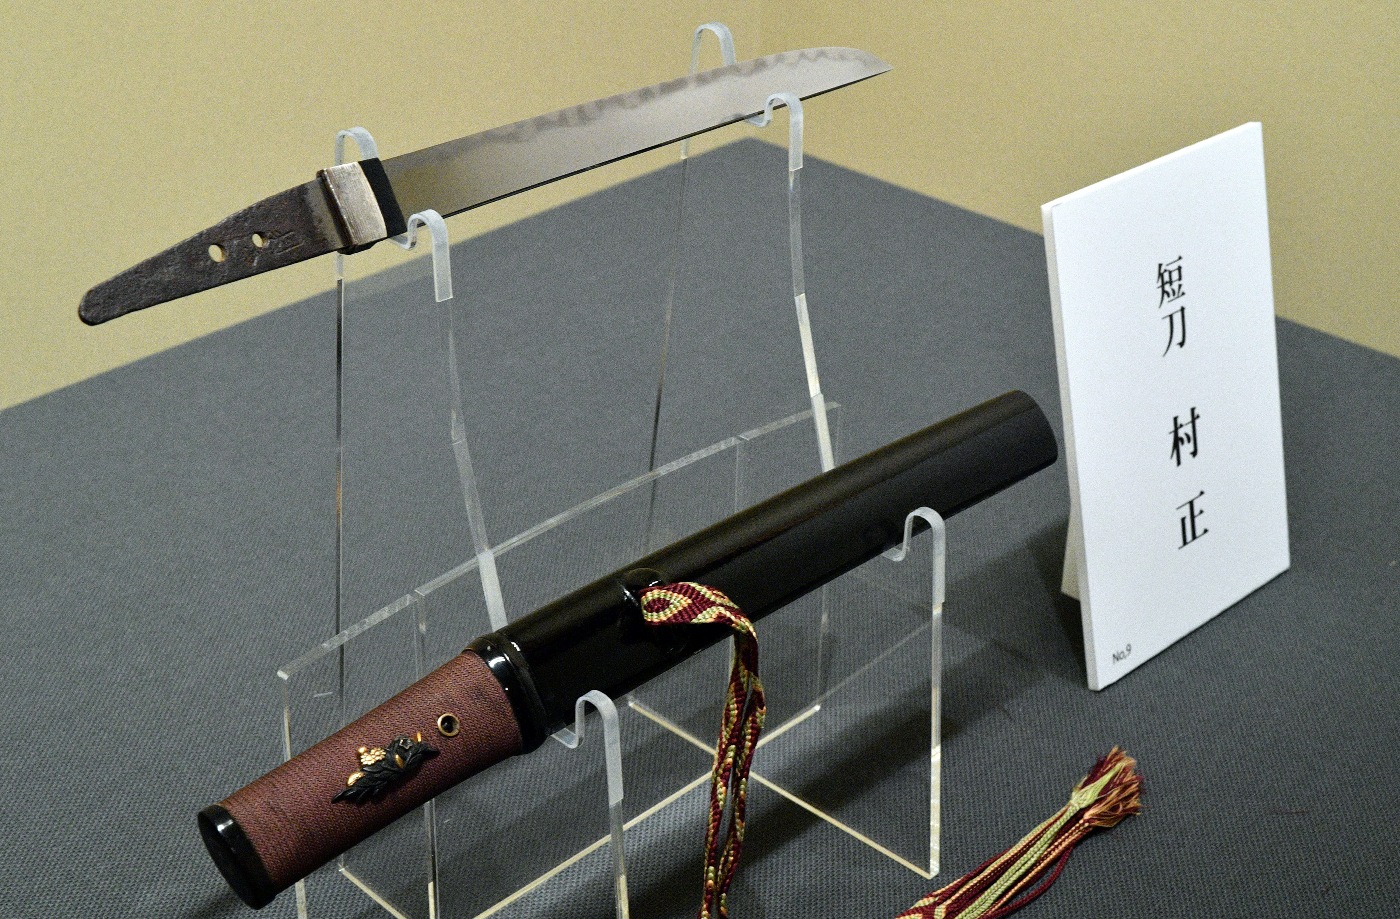 Muramasa Dagger Given By Vladimir Putin to Shinzo Abe on Public Display November 16-18